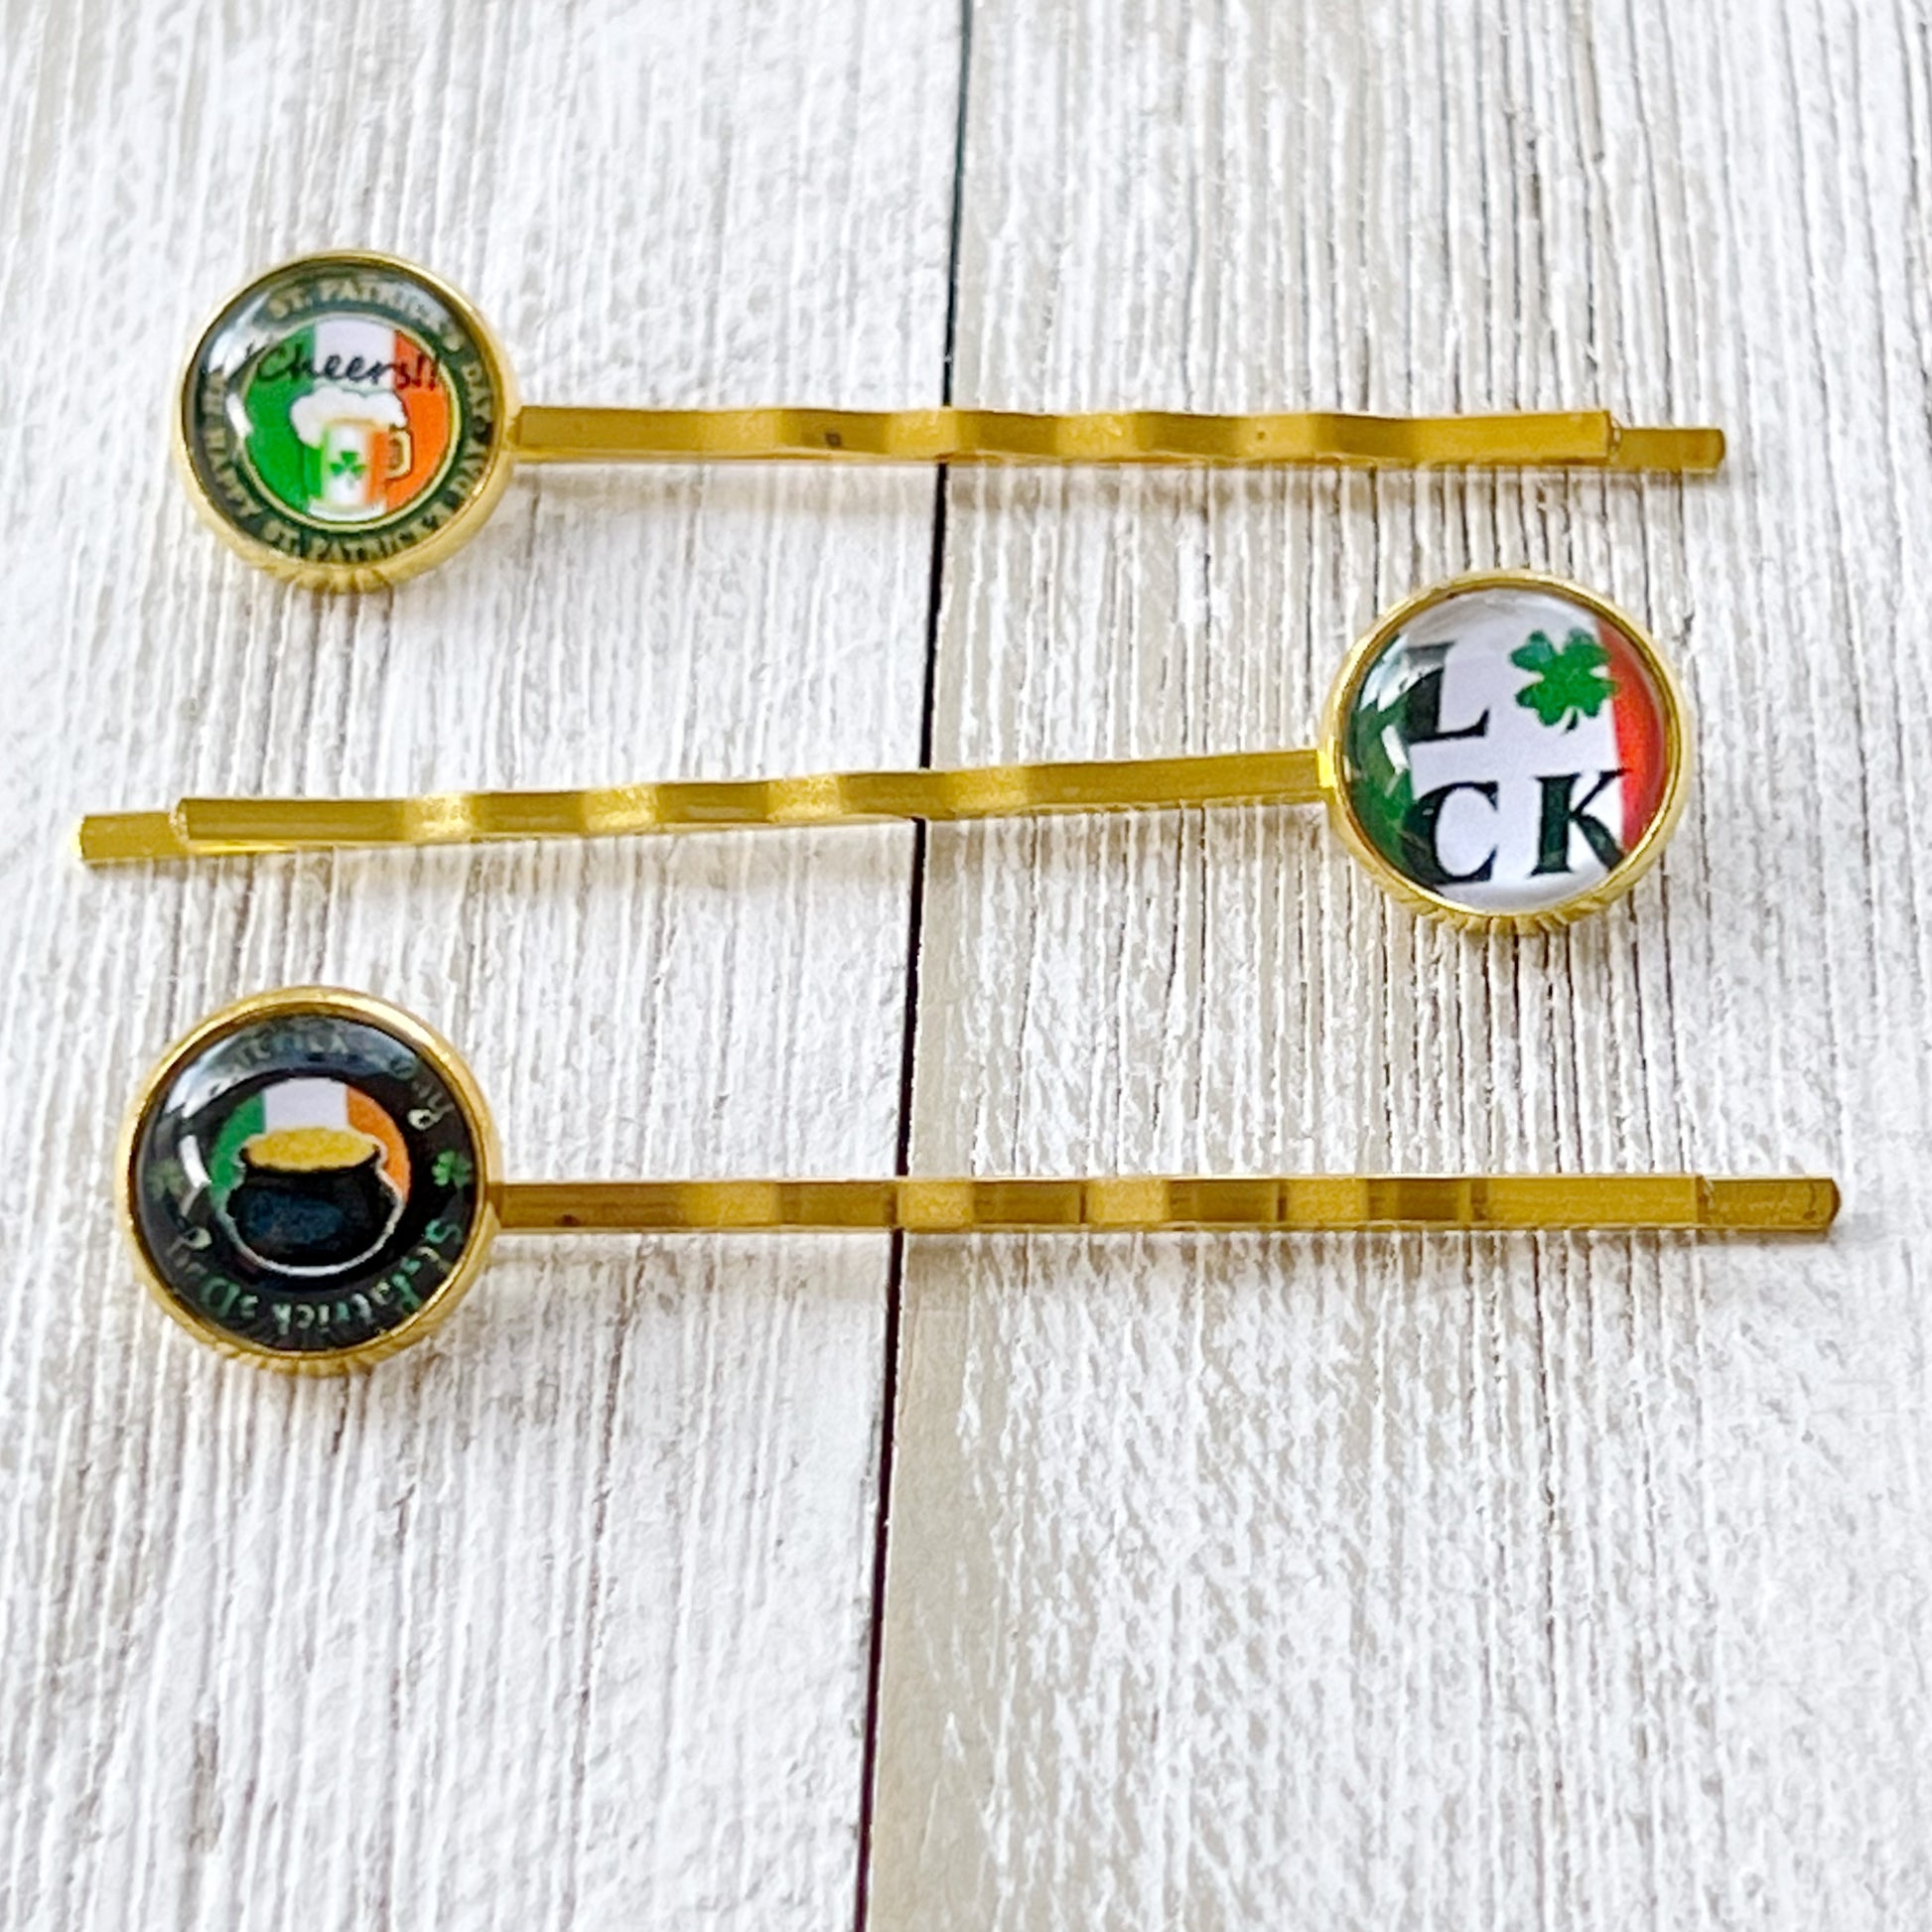 Funny Saying St Patricks Day Hair Pins Set of 3